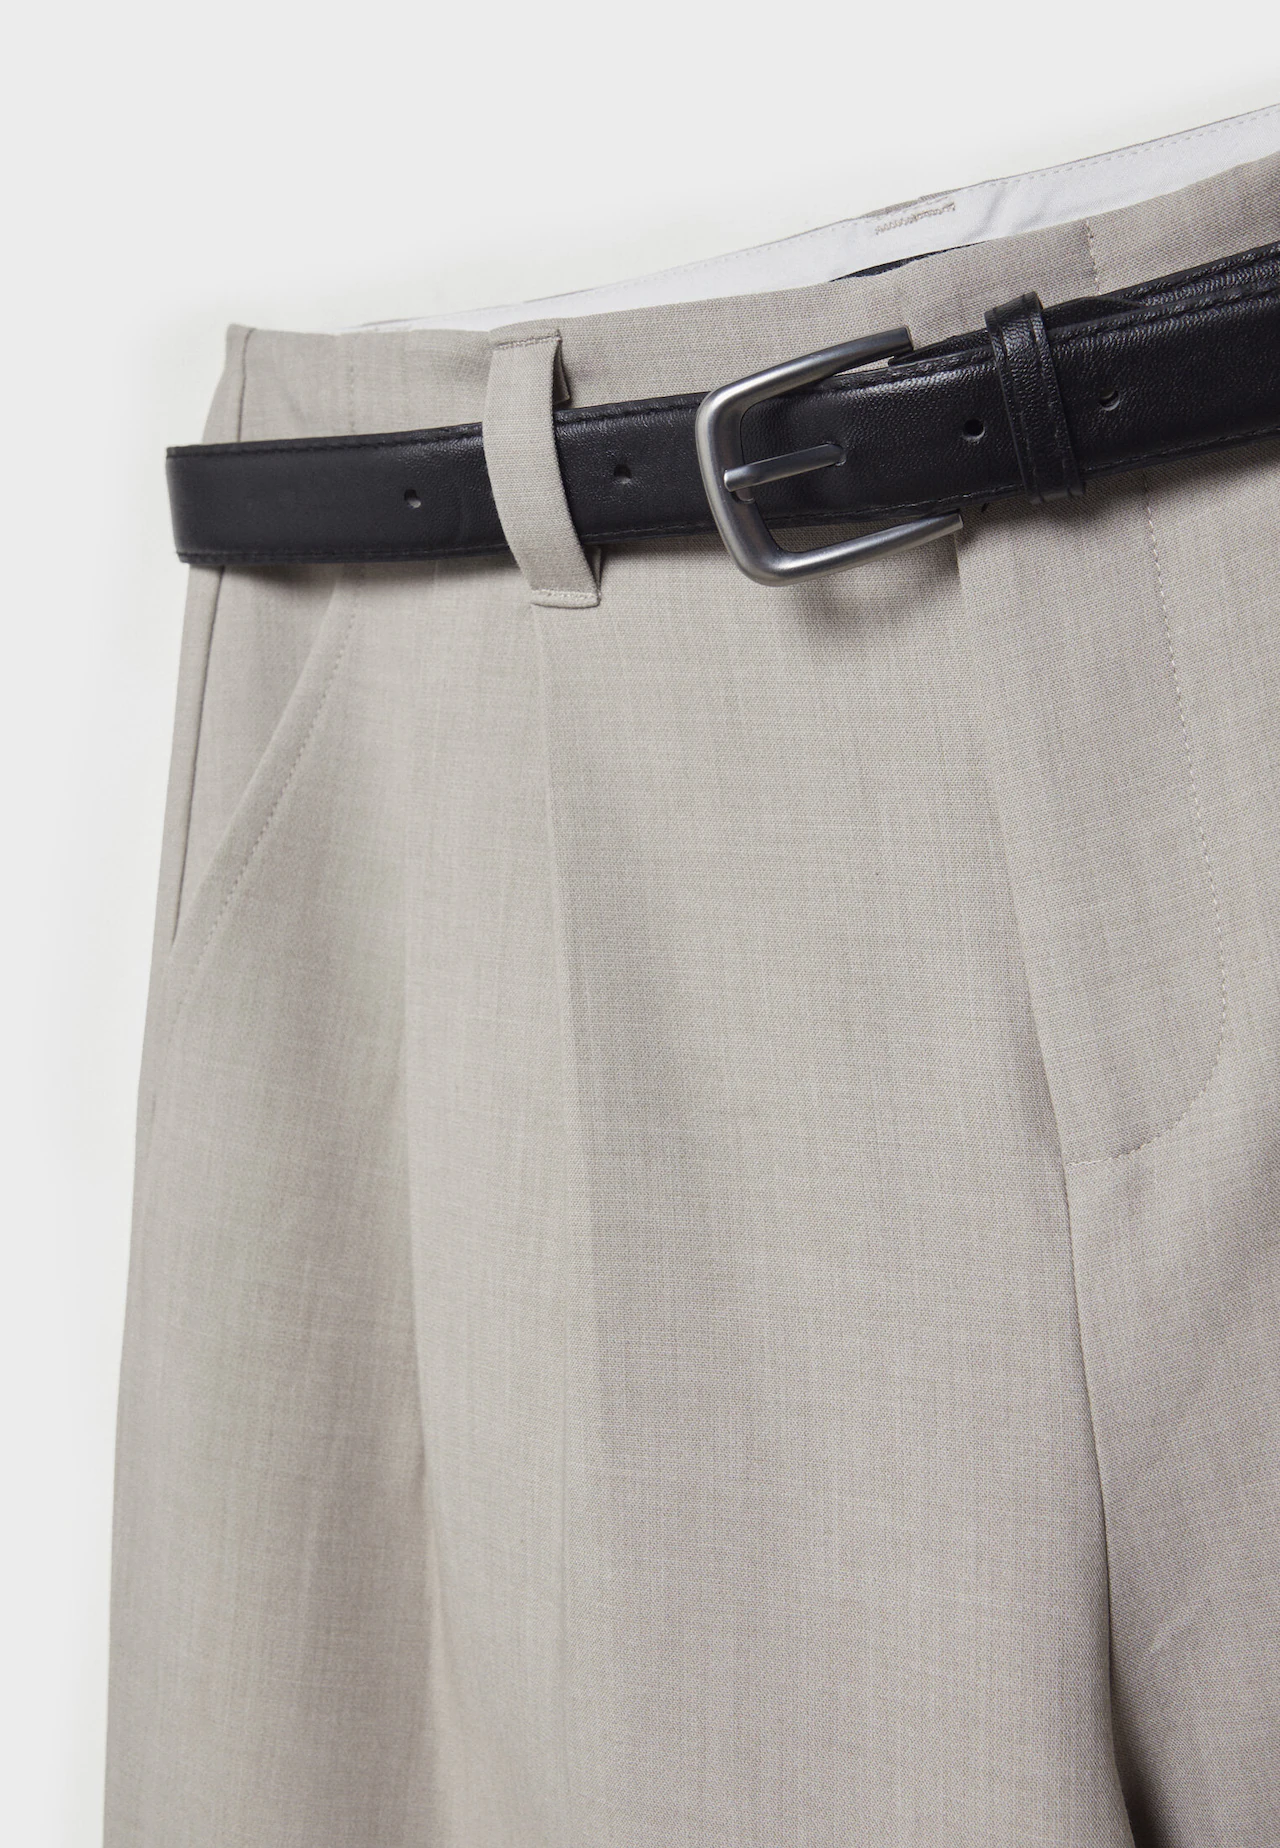 Smart trousers with belt - Women's fashion